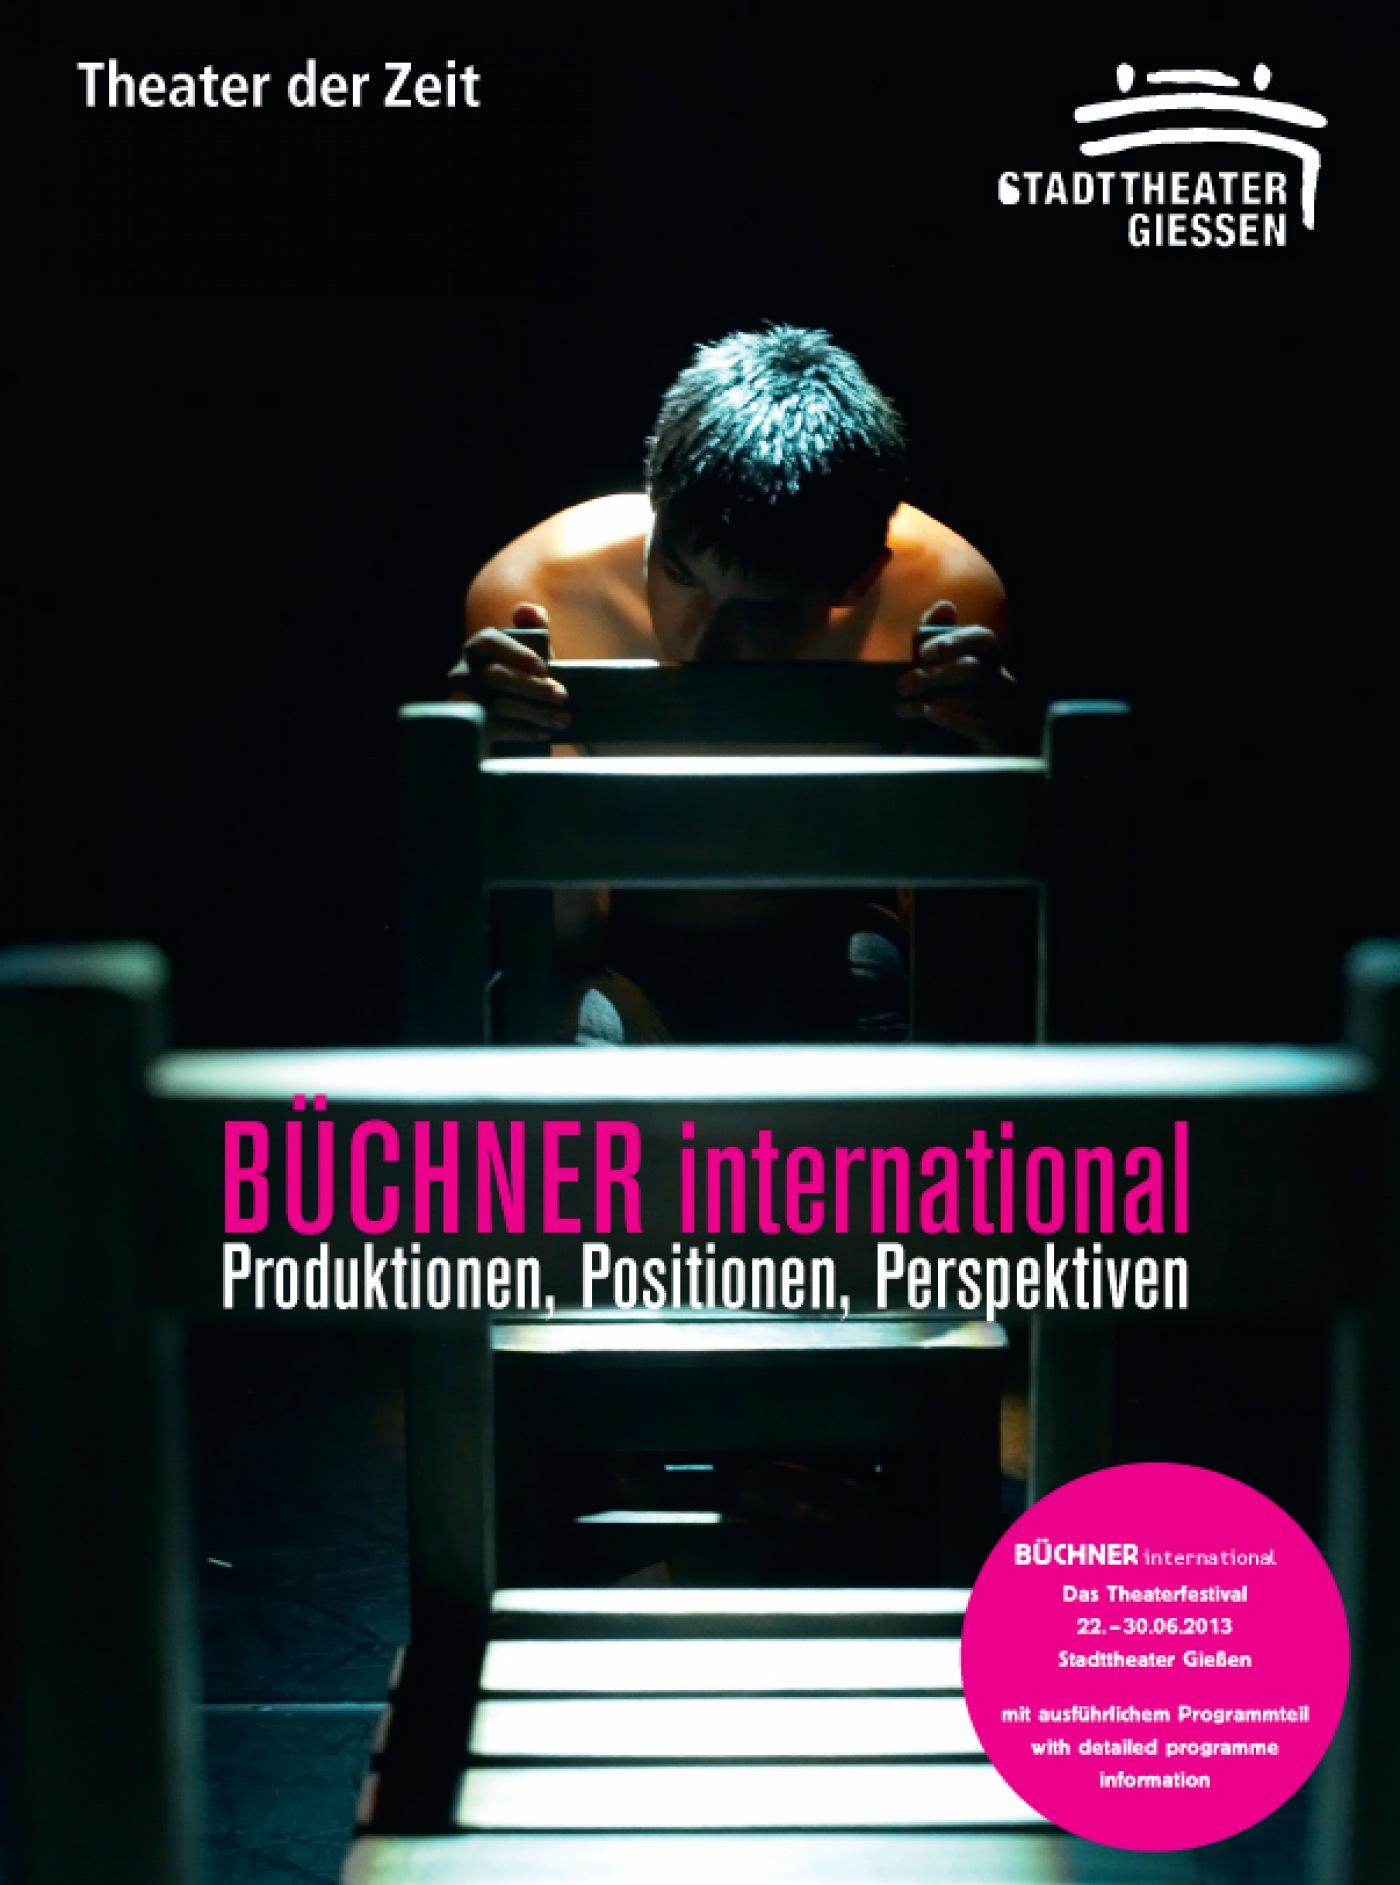 "BÜCHNER international"